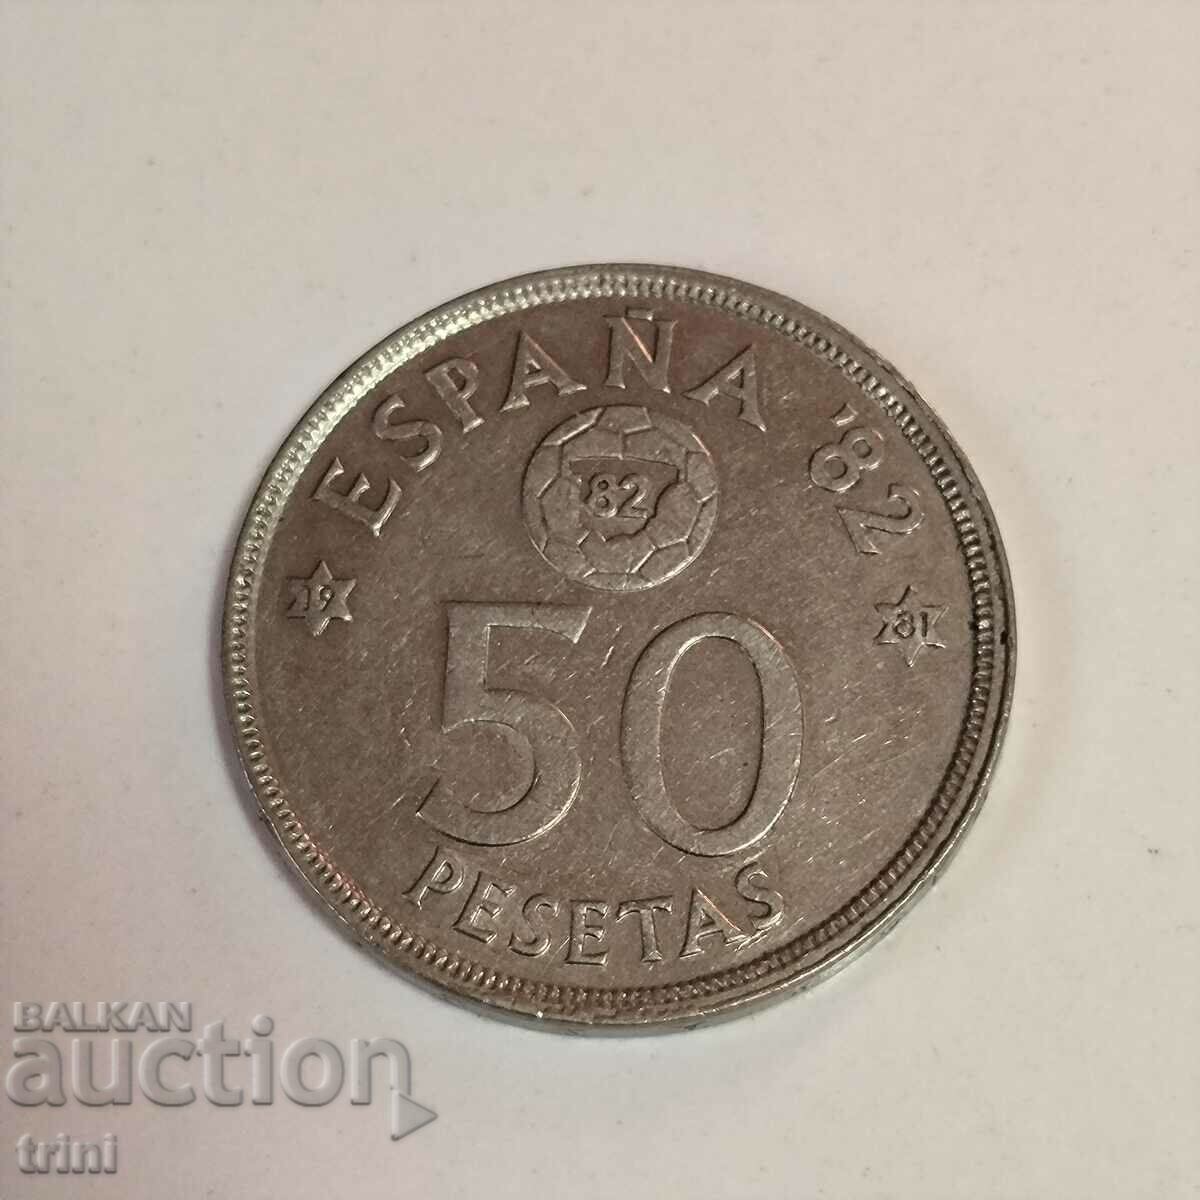 Spania 50 pesetas 1980 an g49